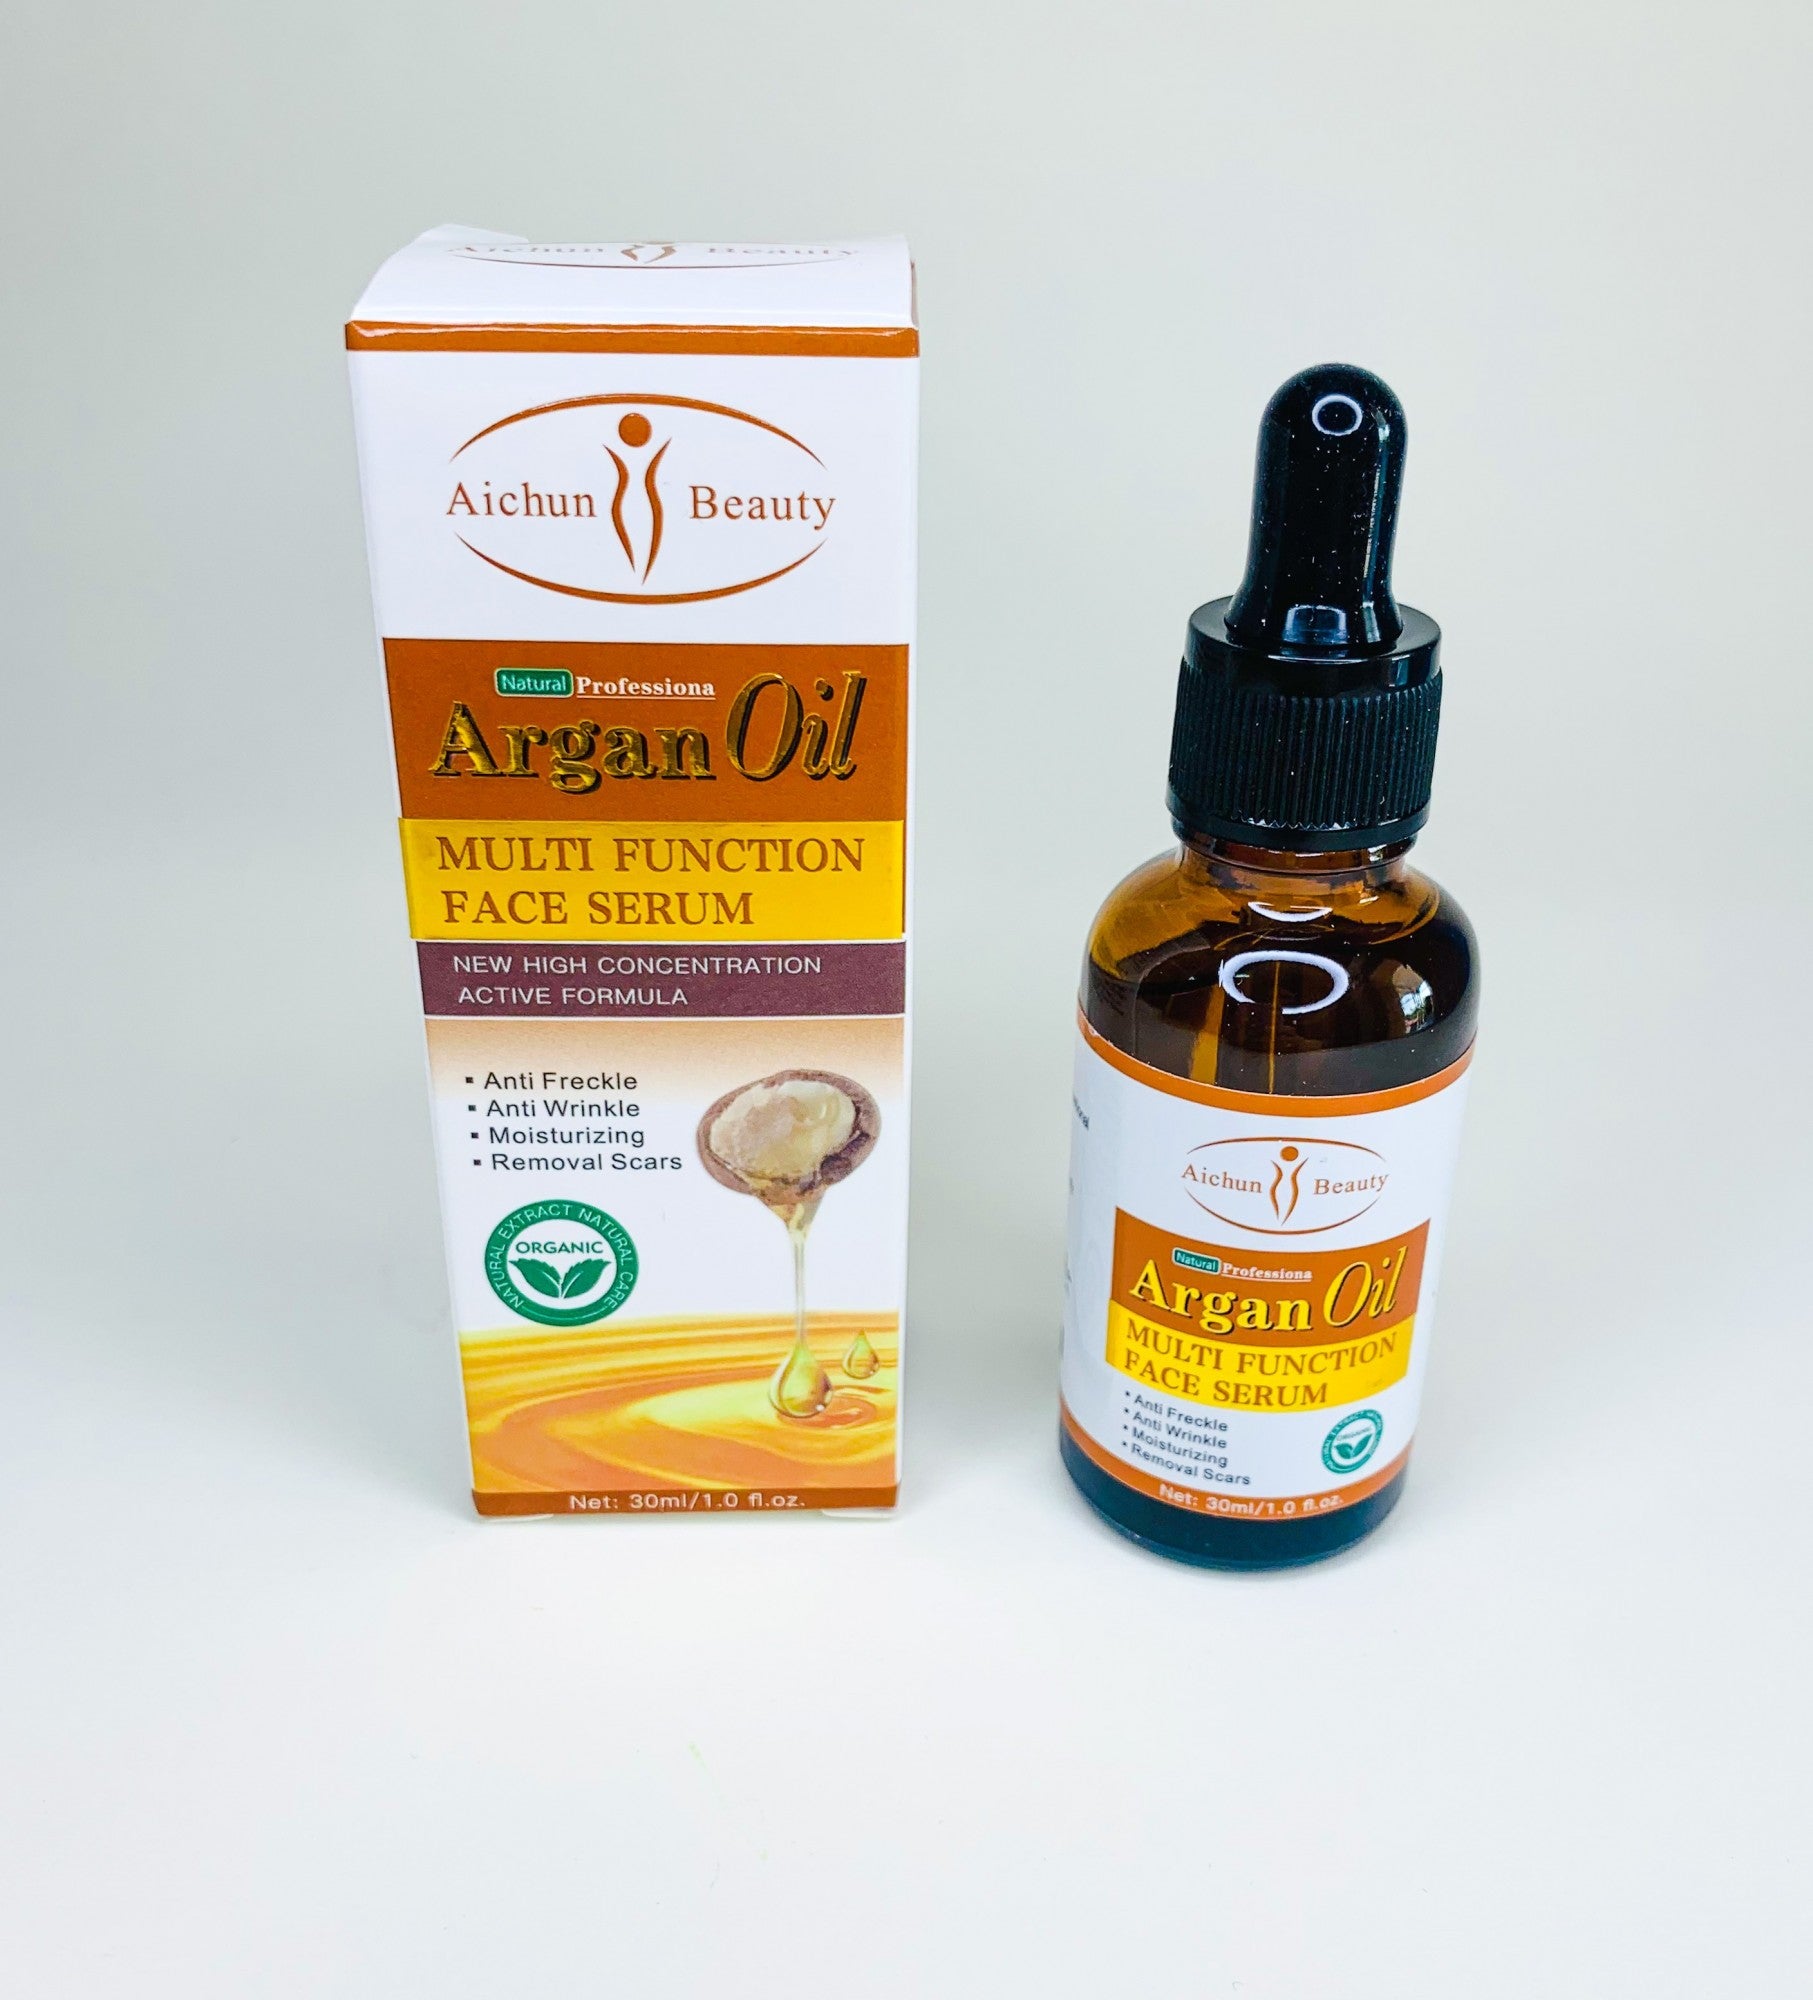 Aichun Beauty Argan Oil Multi Function Face Serum 30ml